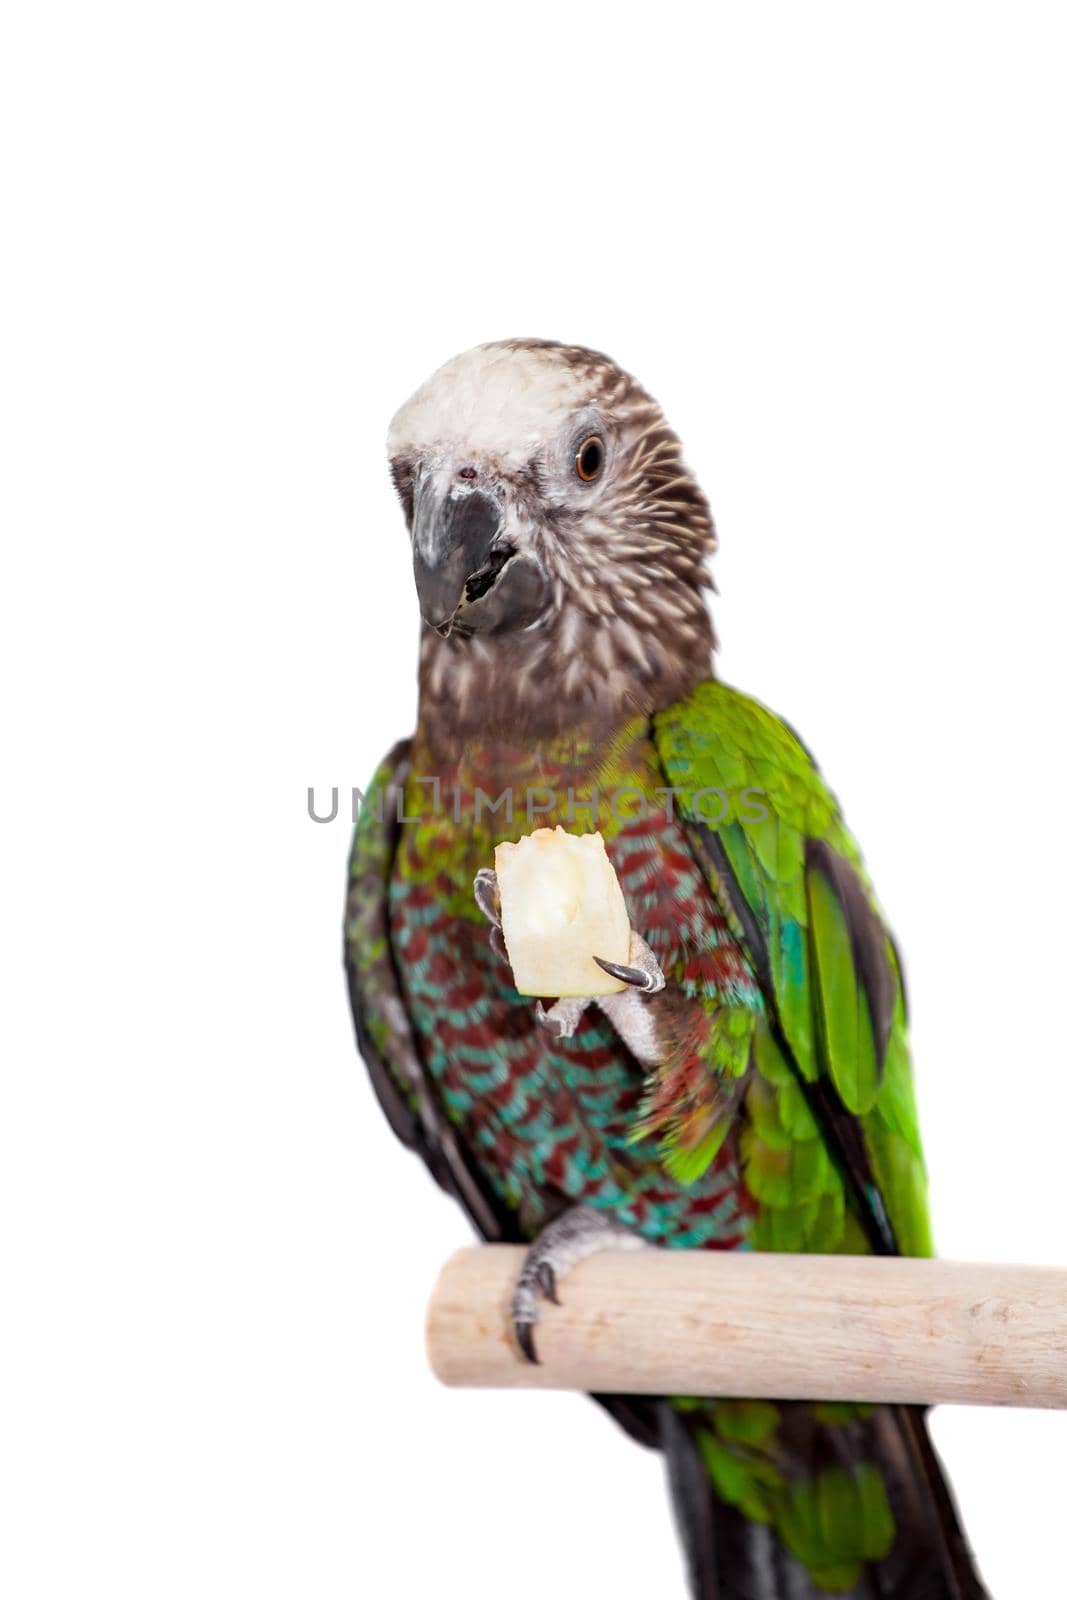 Hawk-headed Parrot, Deroptyus accipitrinus by RosaJay